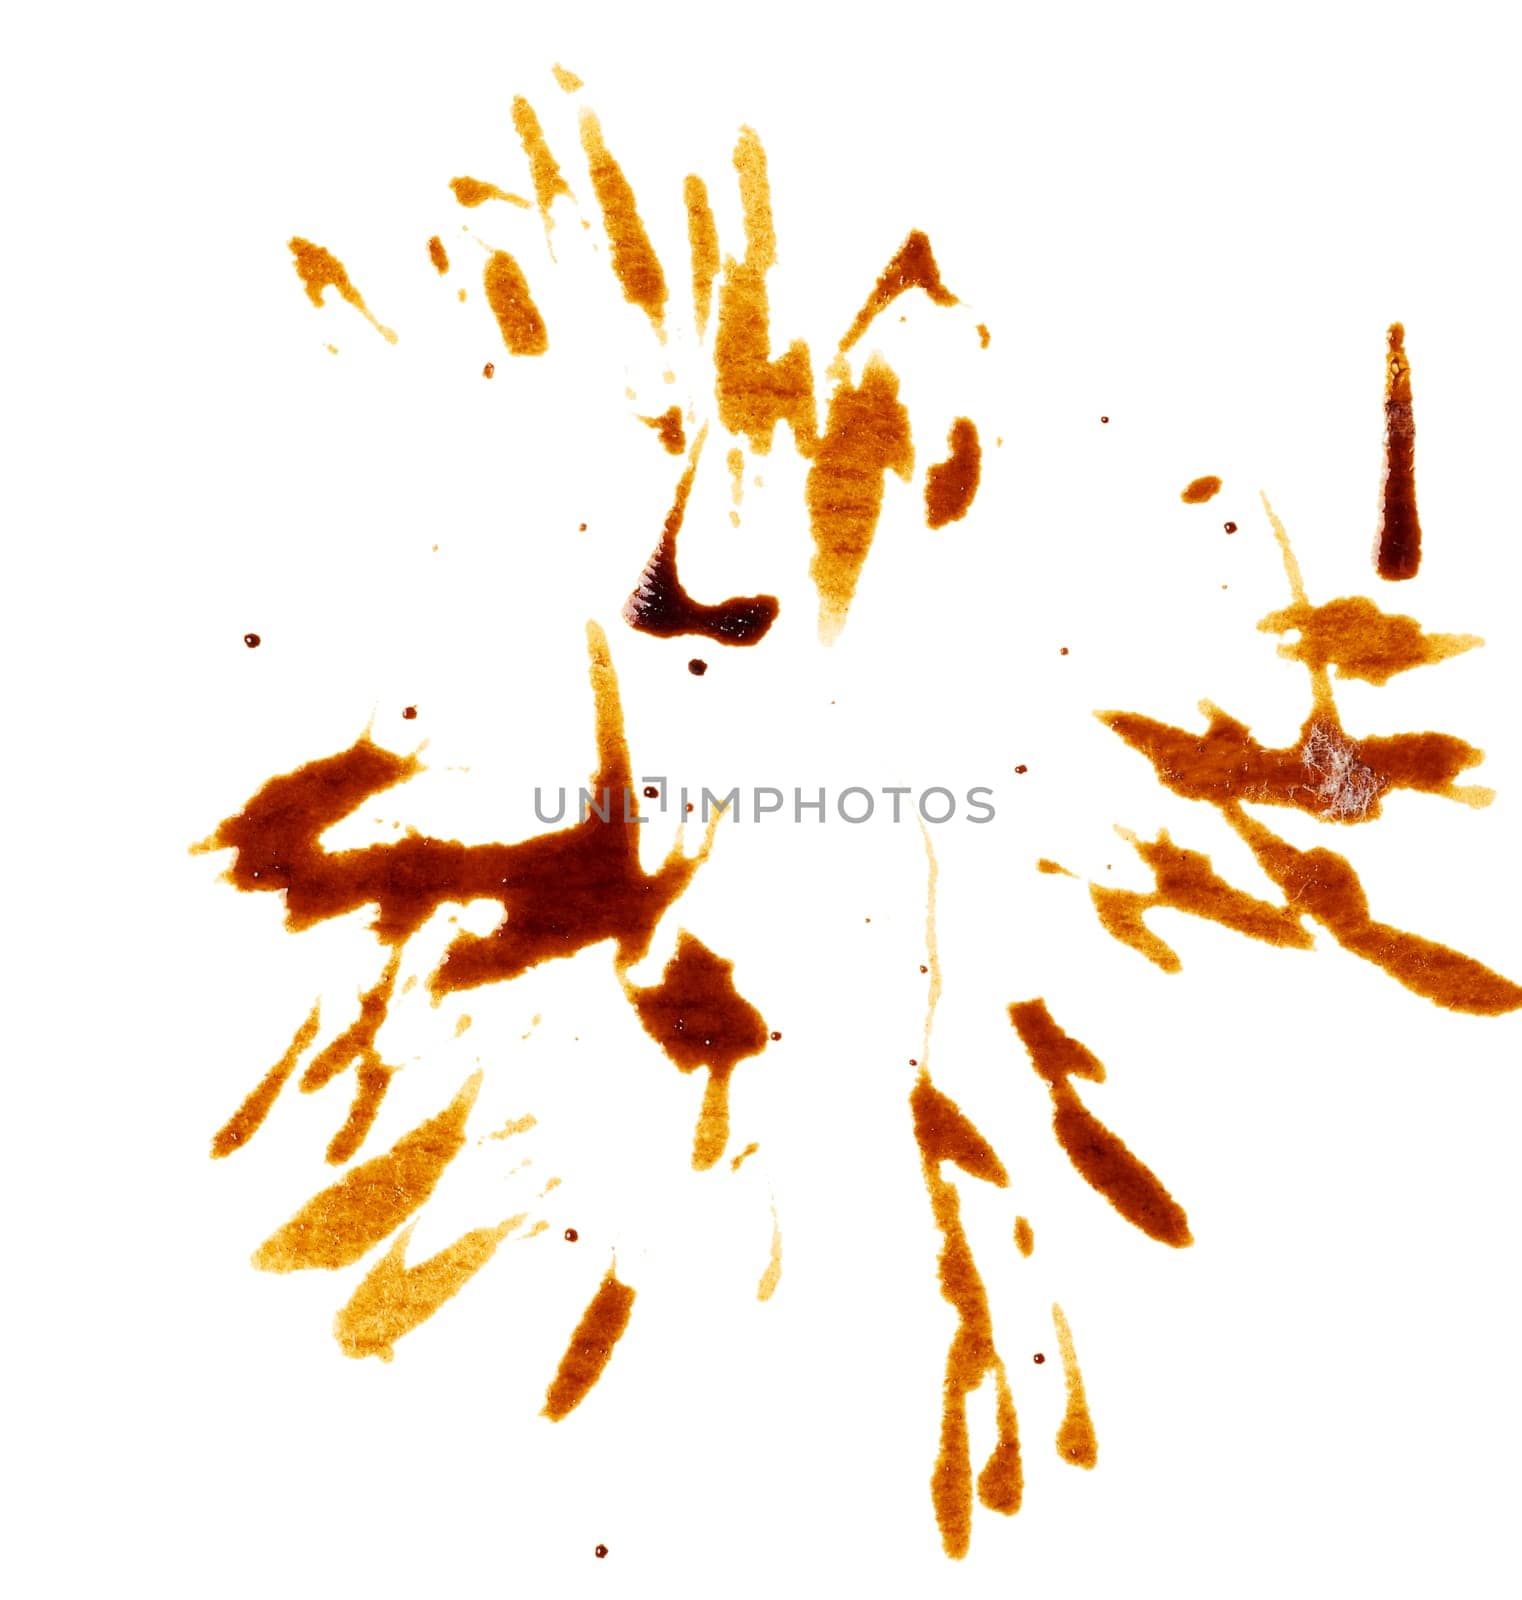 Spilled black coffee, splashes on a white background by ndanko